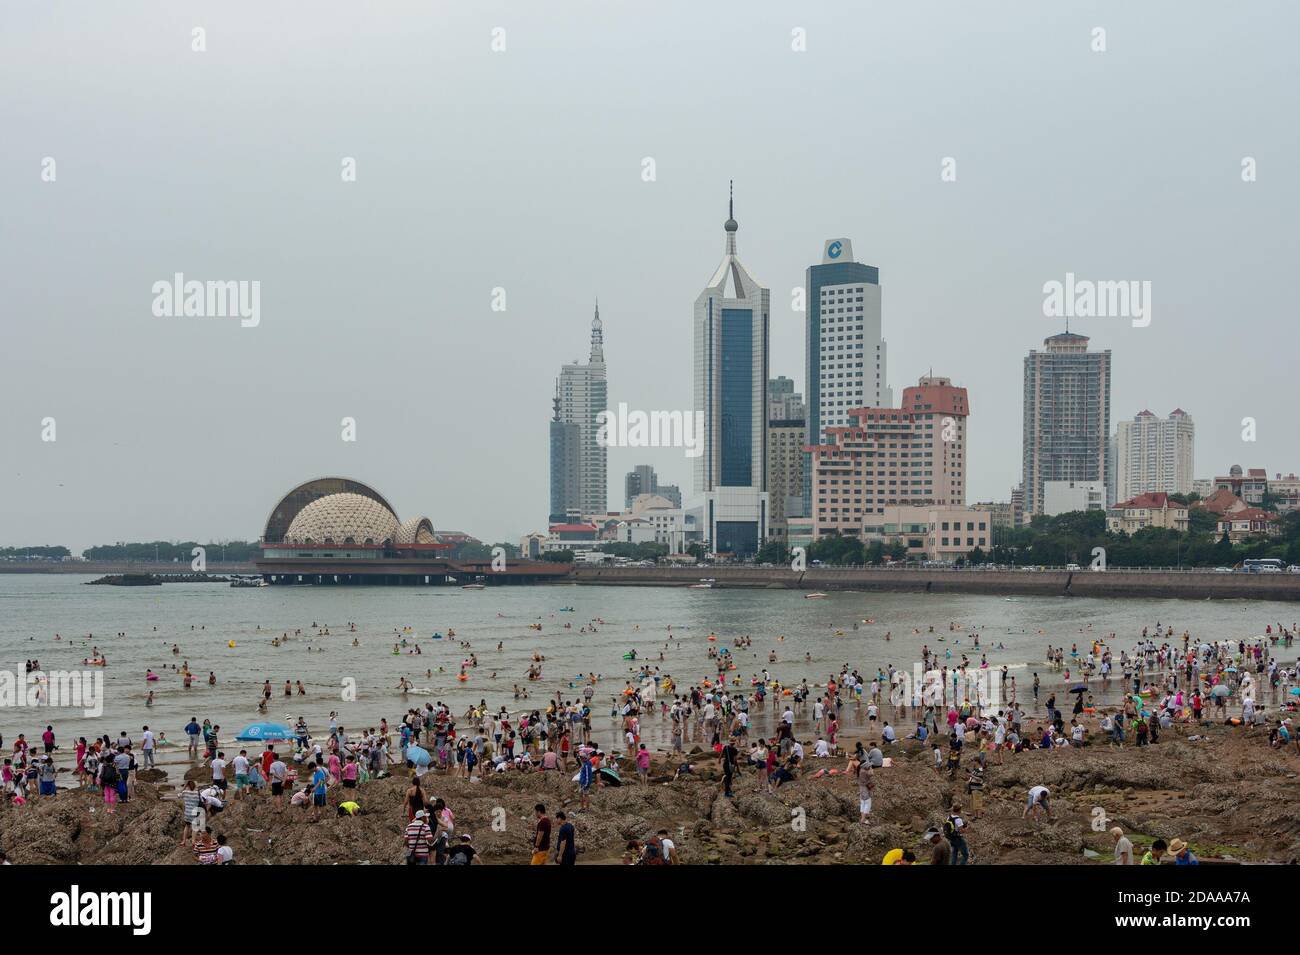 Qingdao / China - August 5, 2015: People bathing at the Qingdao city beach, Shandong province, China Stock Photo